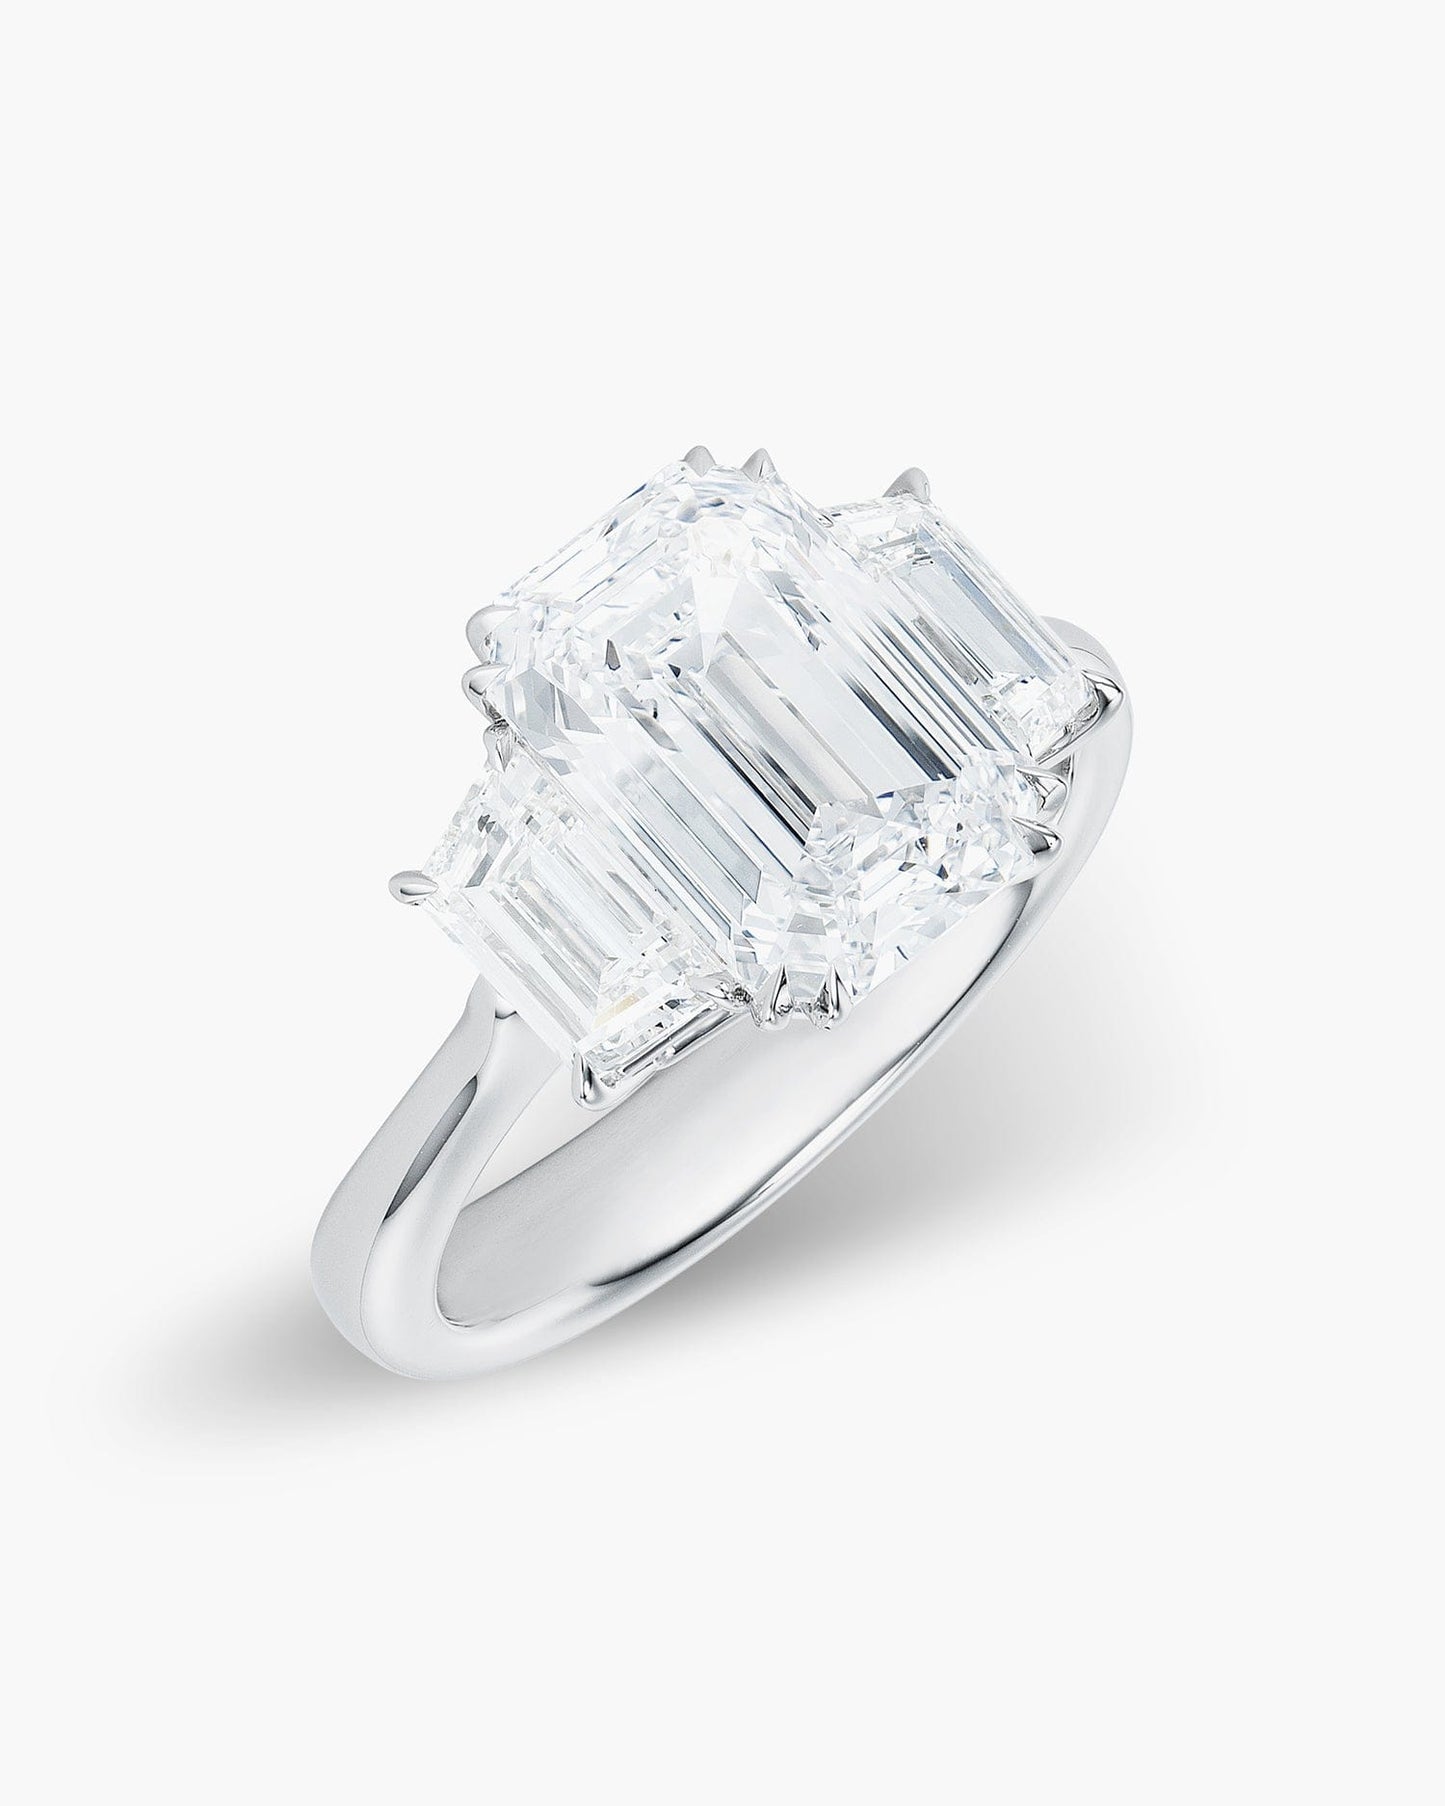 3.13 carat Emerald Cut Diamond Ring